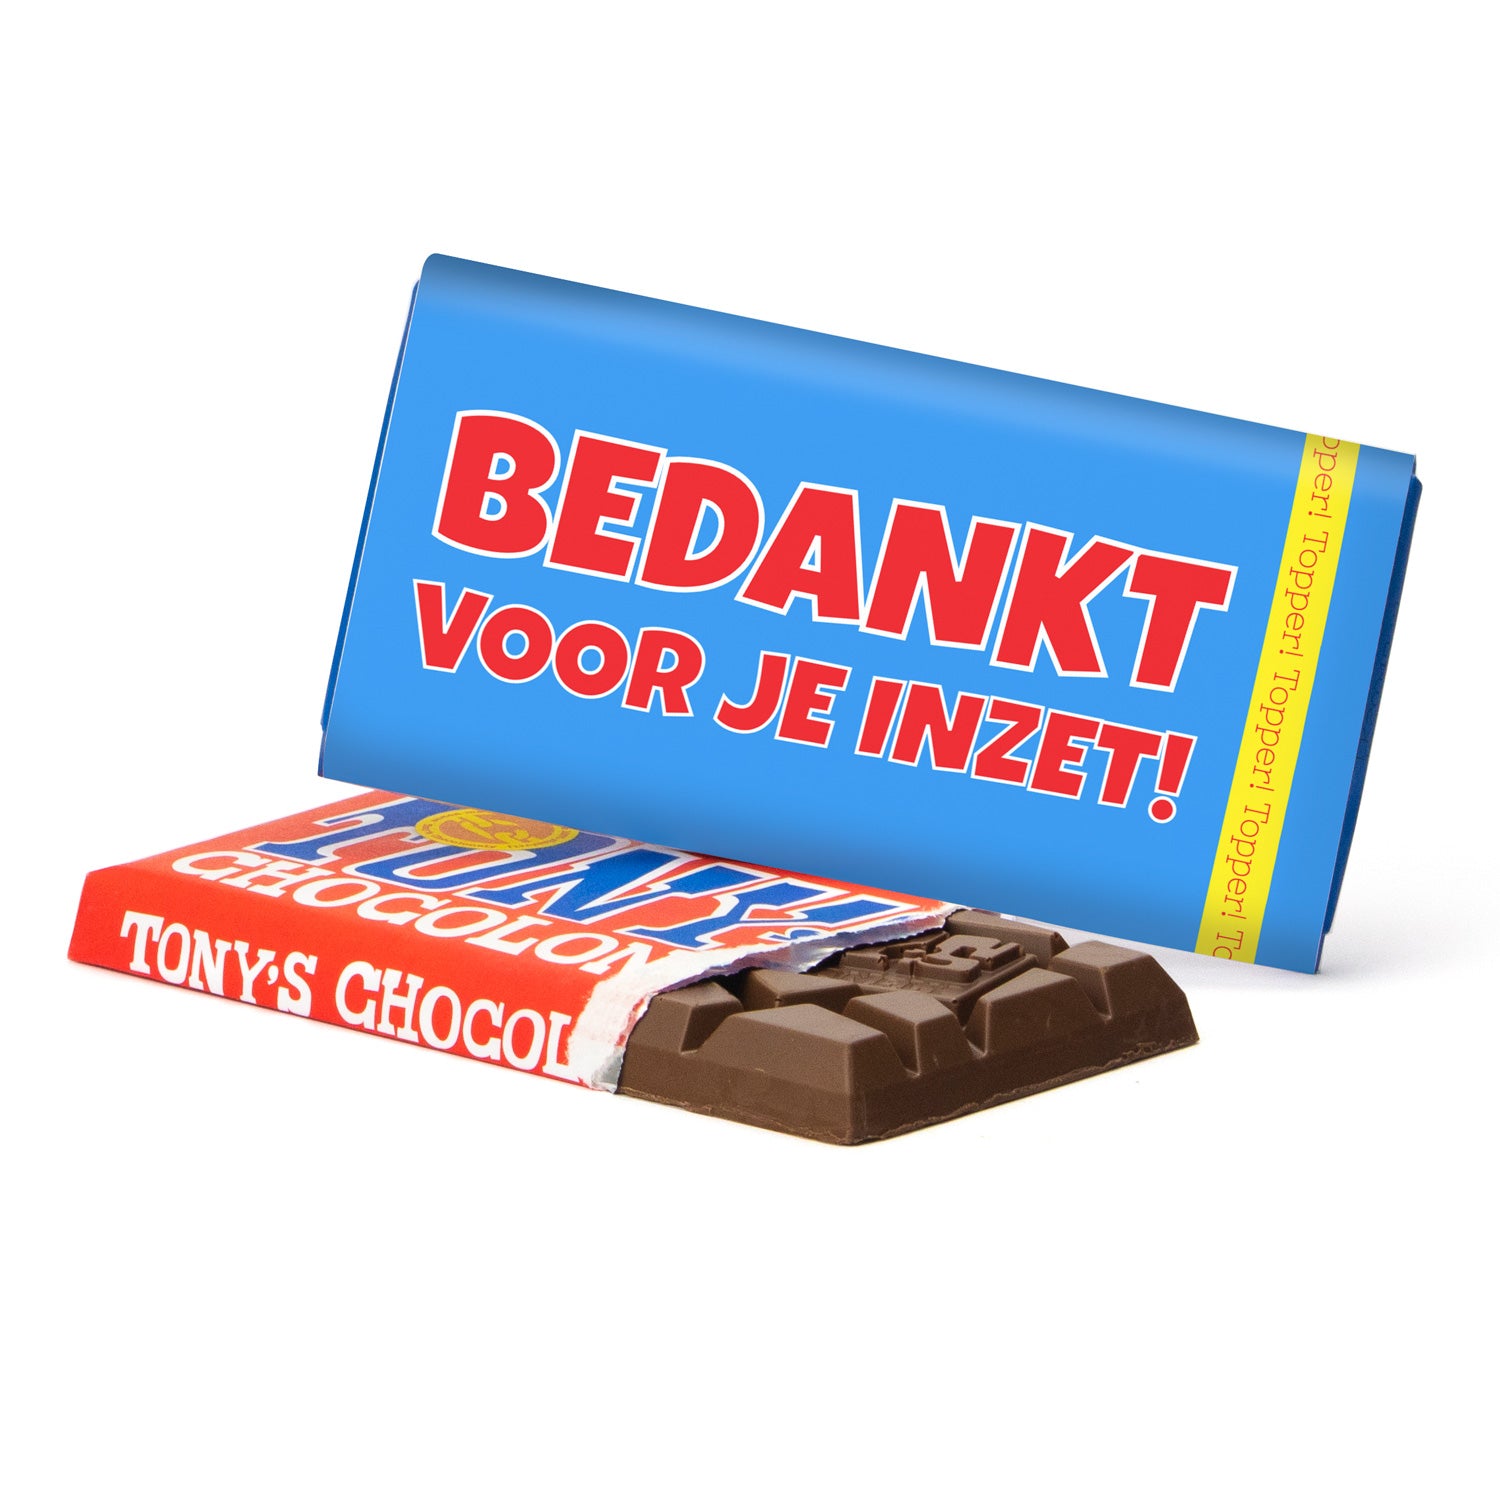 Tony's Chocolonely met eigen wikkel - Vrijwilliger - Bedankjes.nl